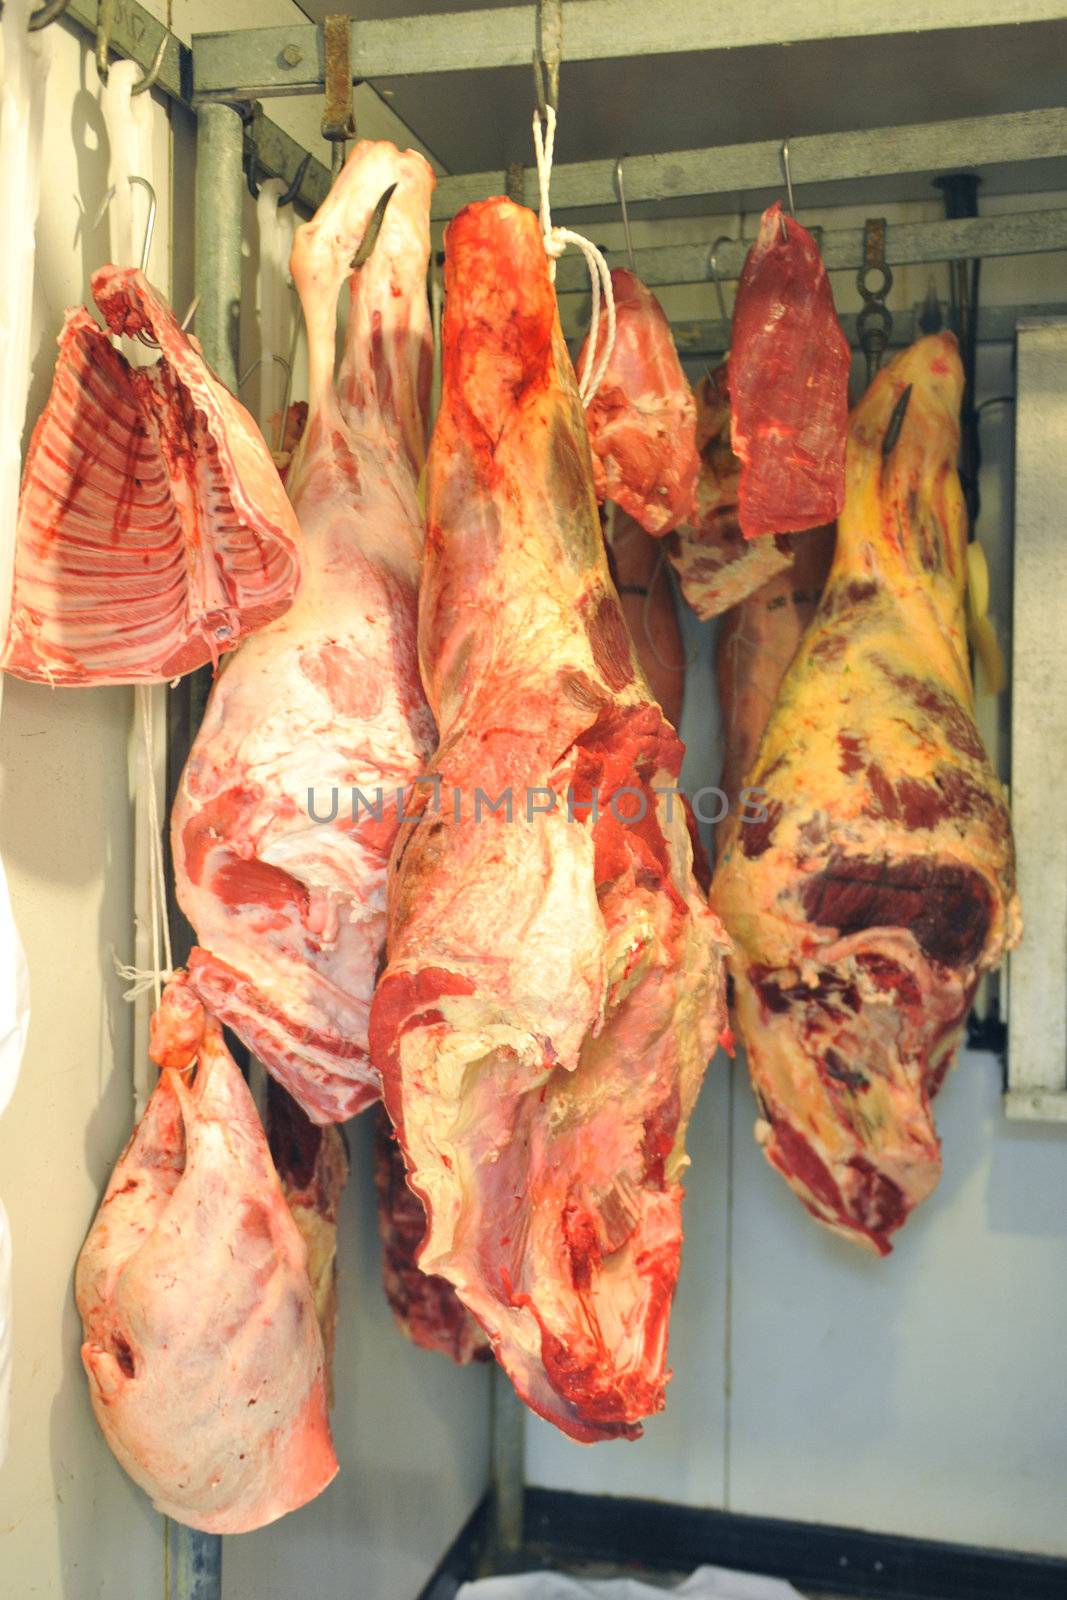 refrigerator with meat by cynoclub